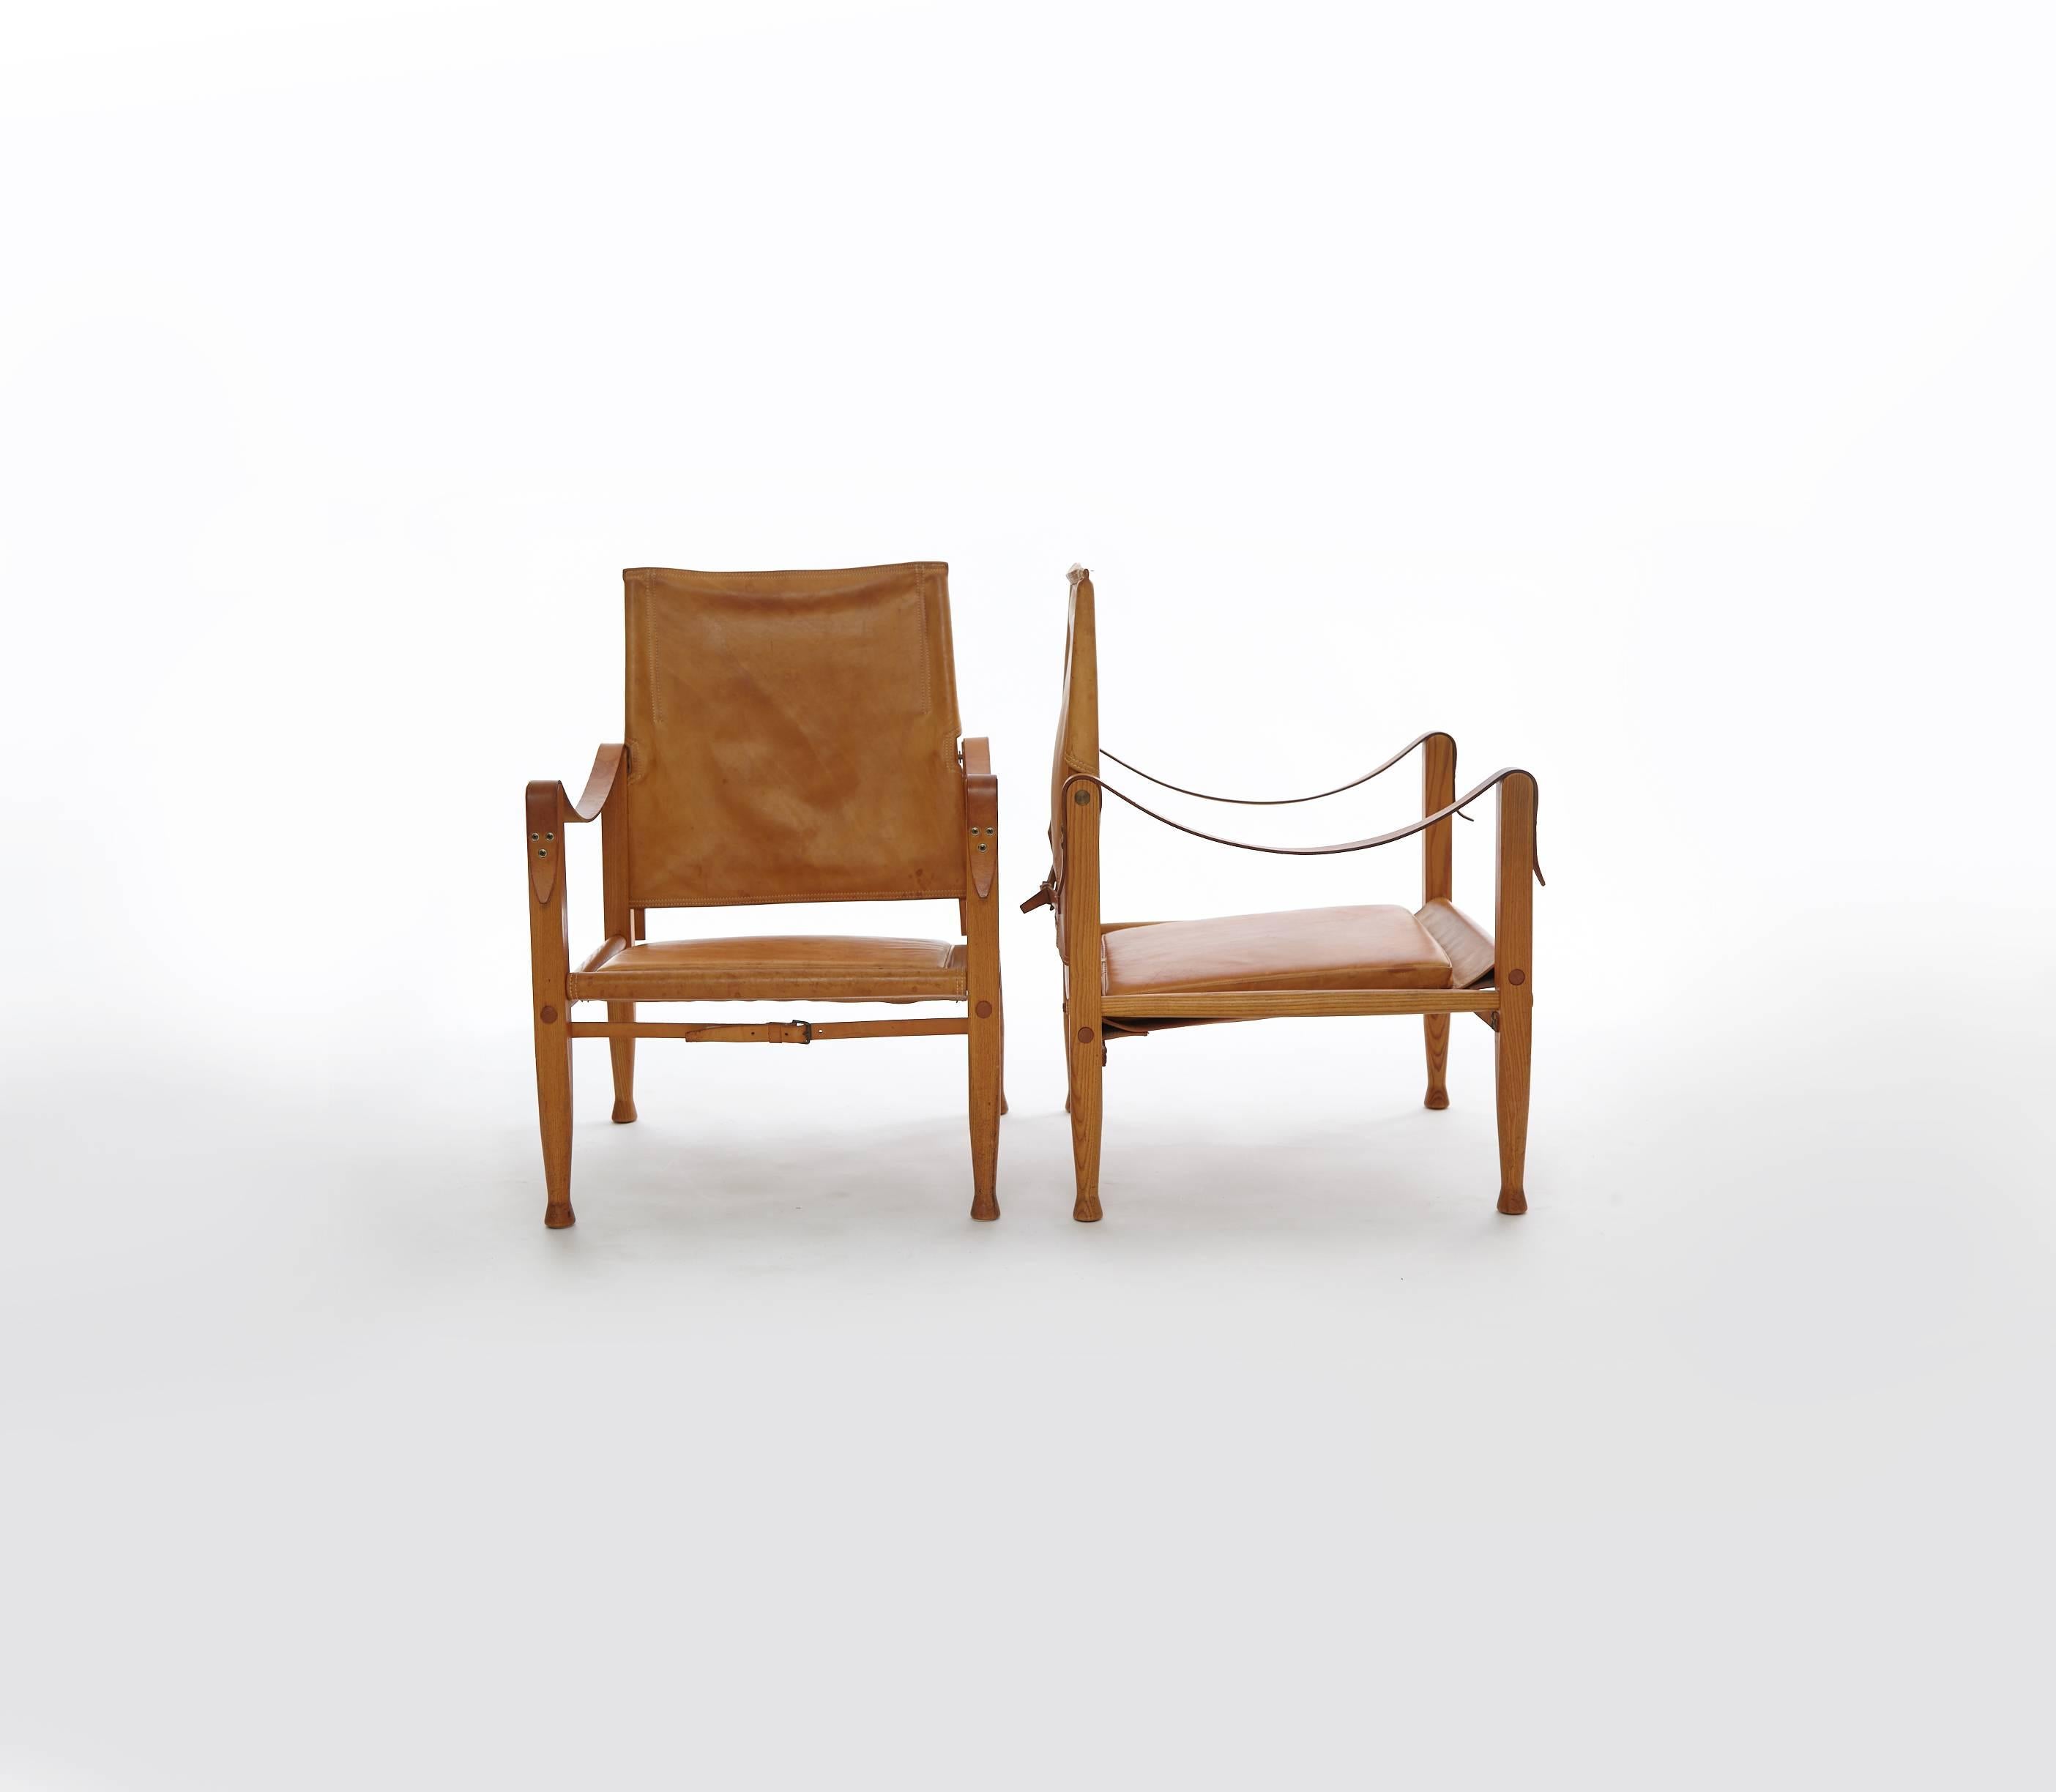 Pair of Kaare Klint Safari Chairs in Tan Leather, Made by Rud Rasmussen, Denmark 1